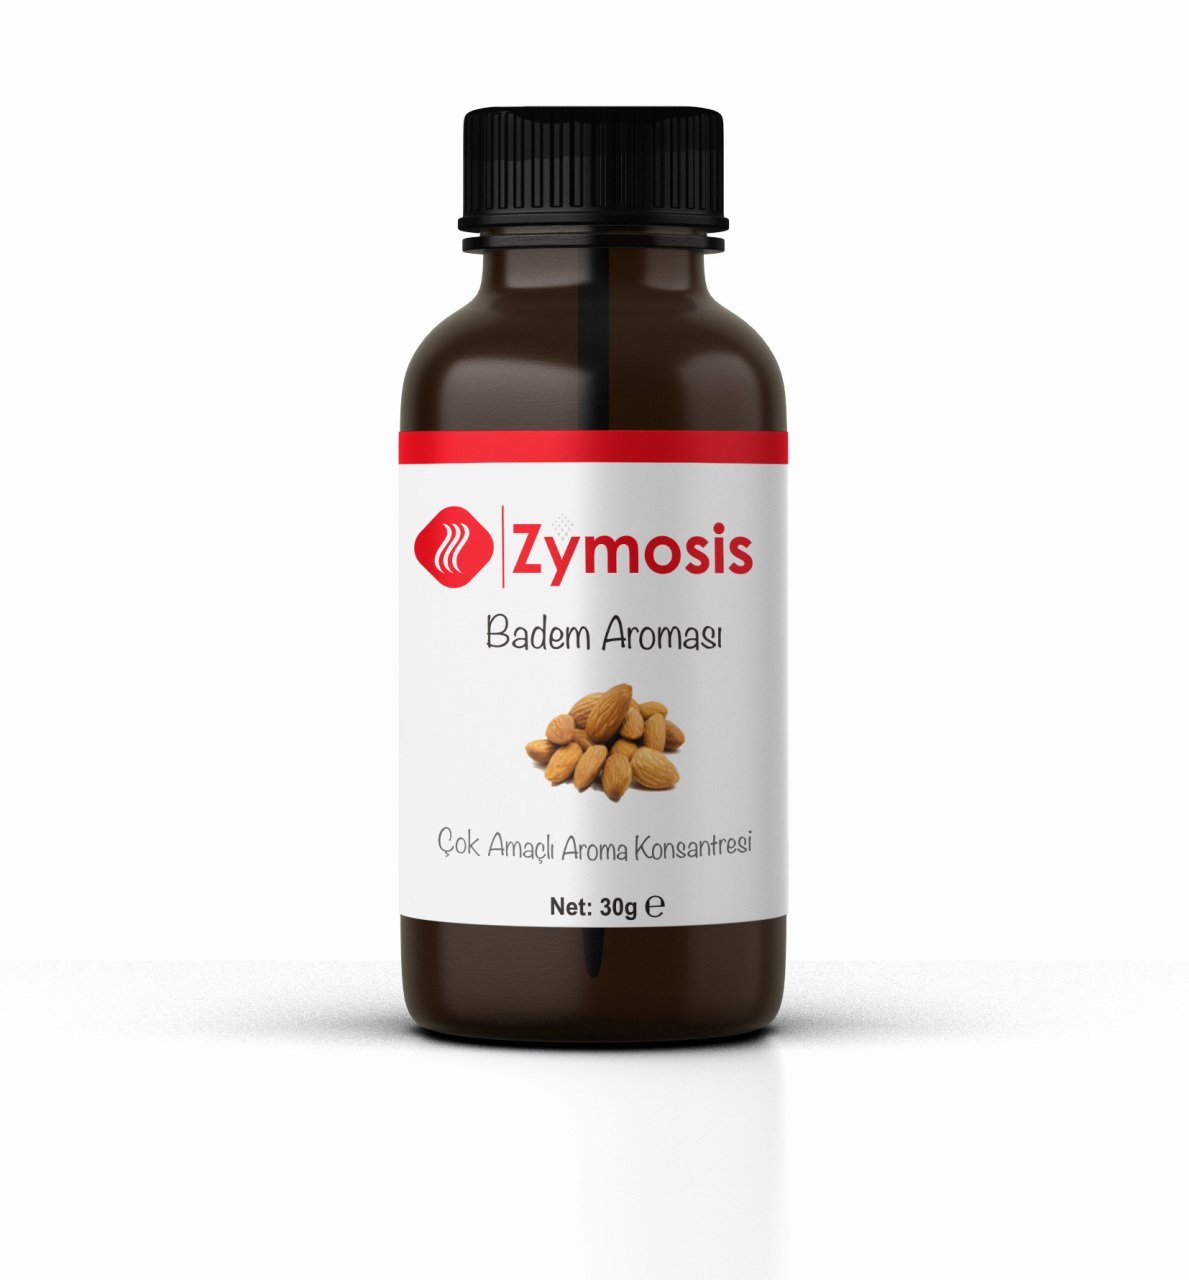 Zymosis Badem Aroması